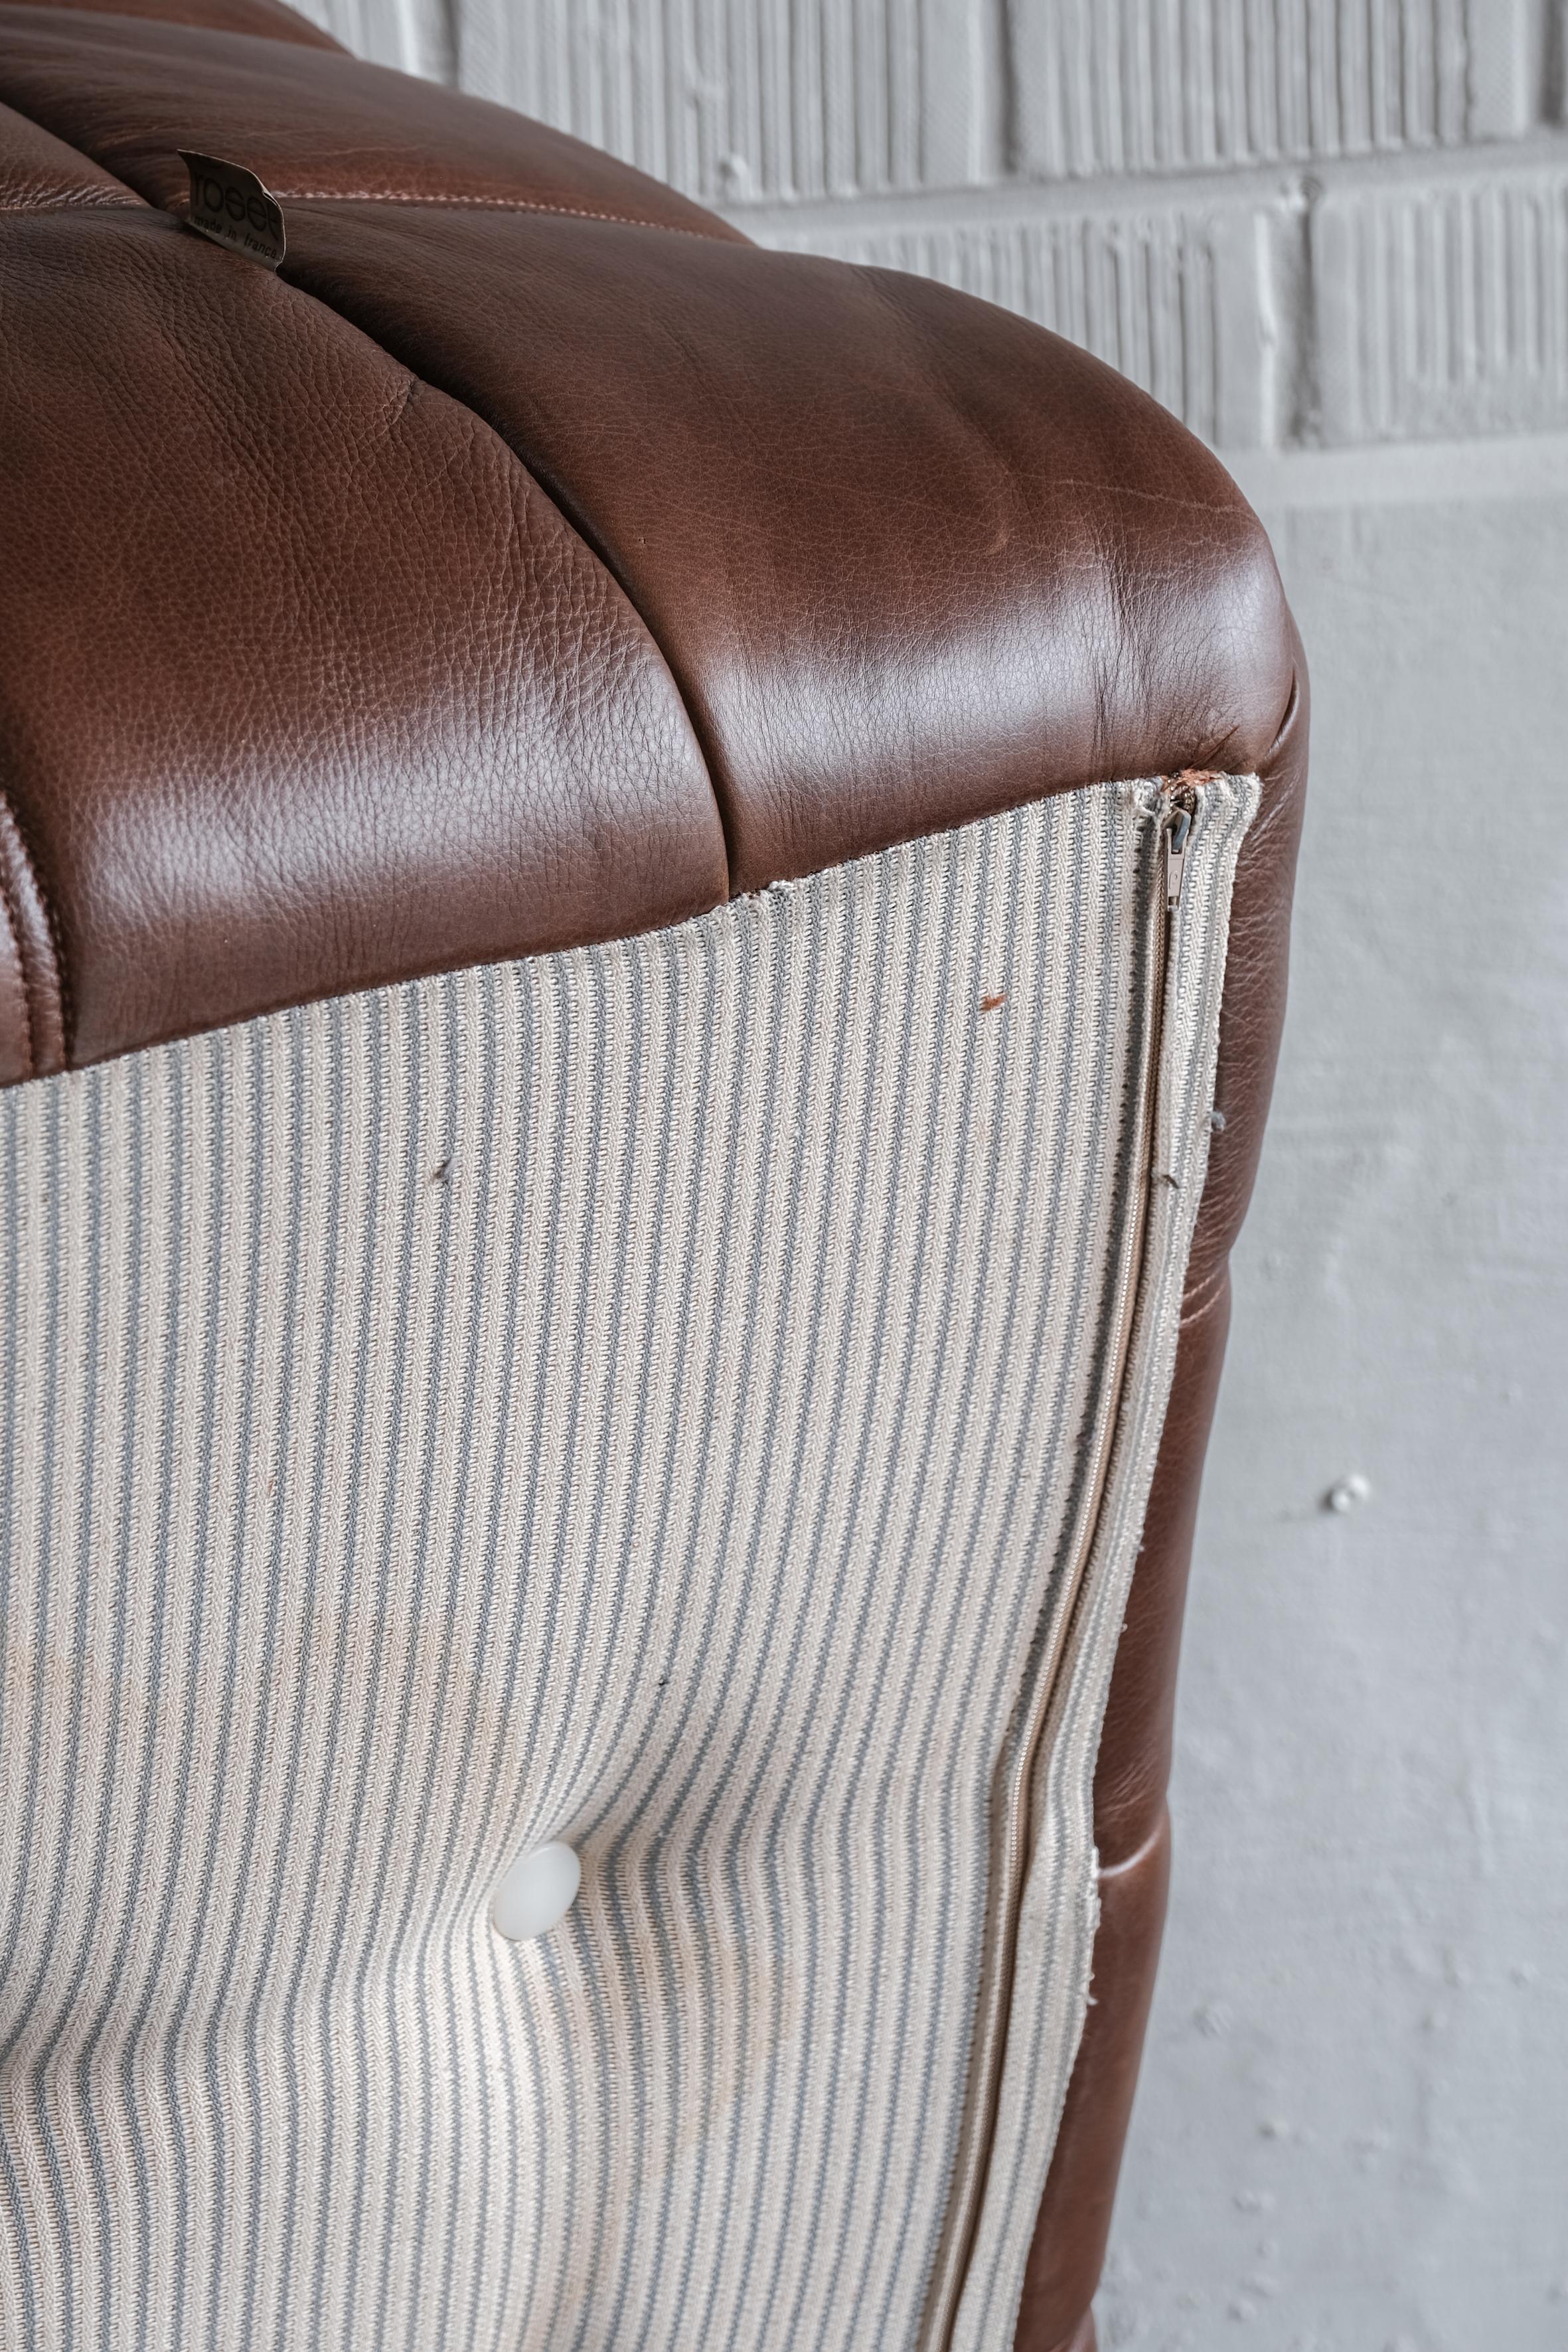 Kashima 3 seater leather sofa designed by Michel Ducaroy for Ligne Roset 1970 10